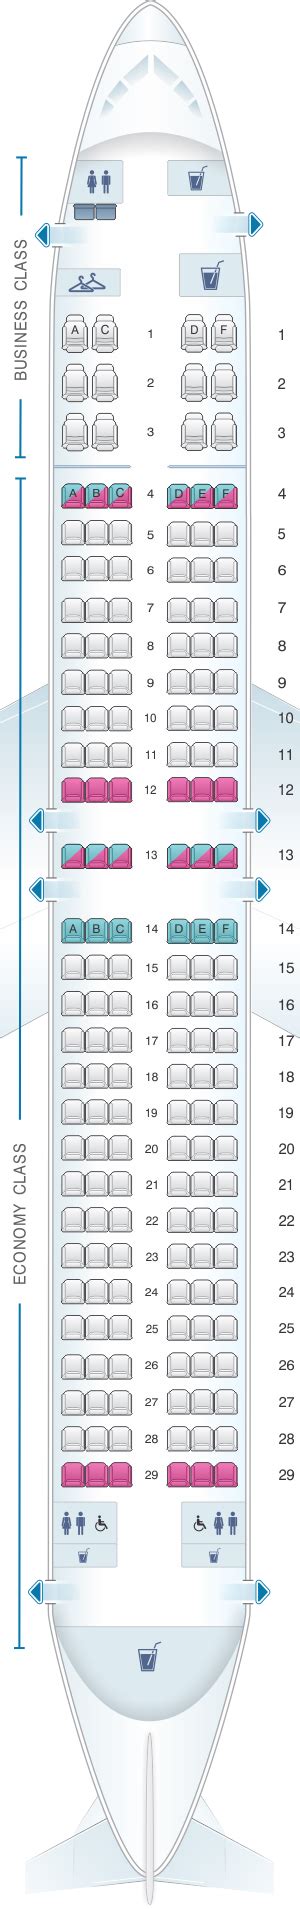 Qantas Airbus A330 300 Seat Map